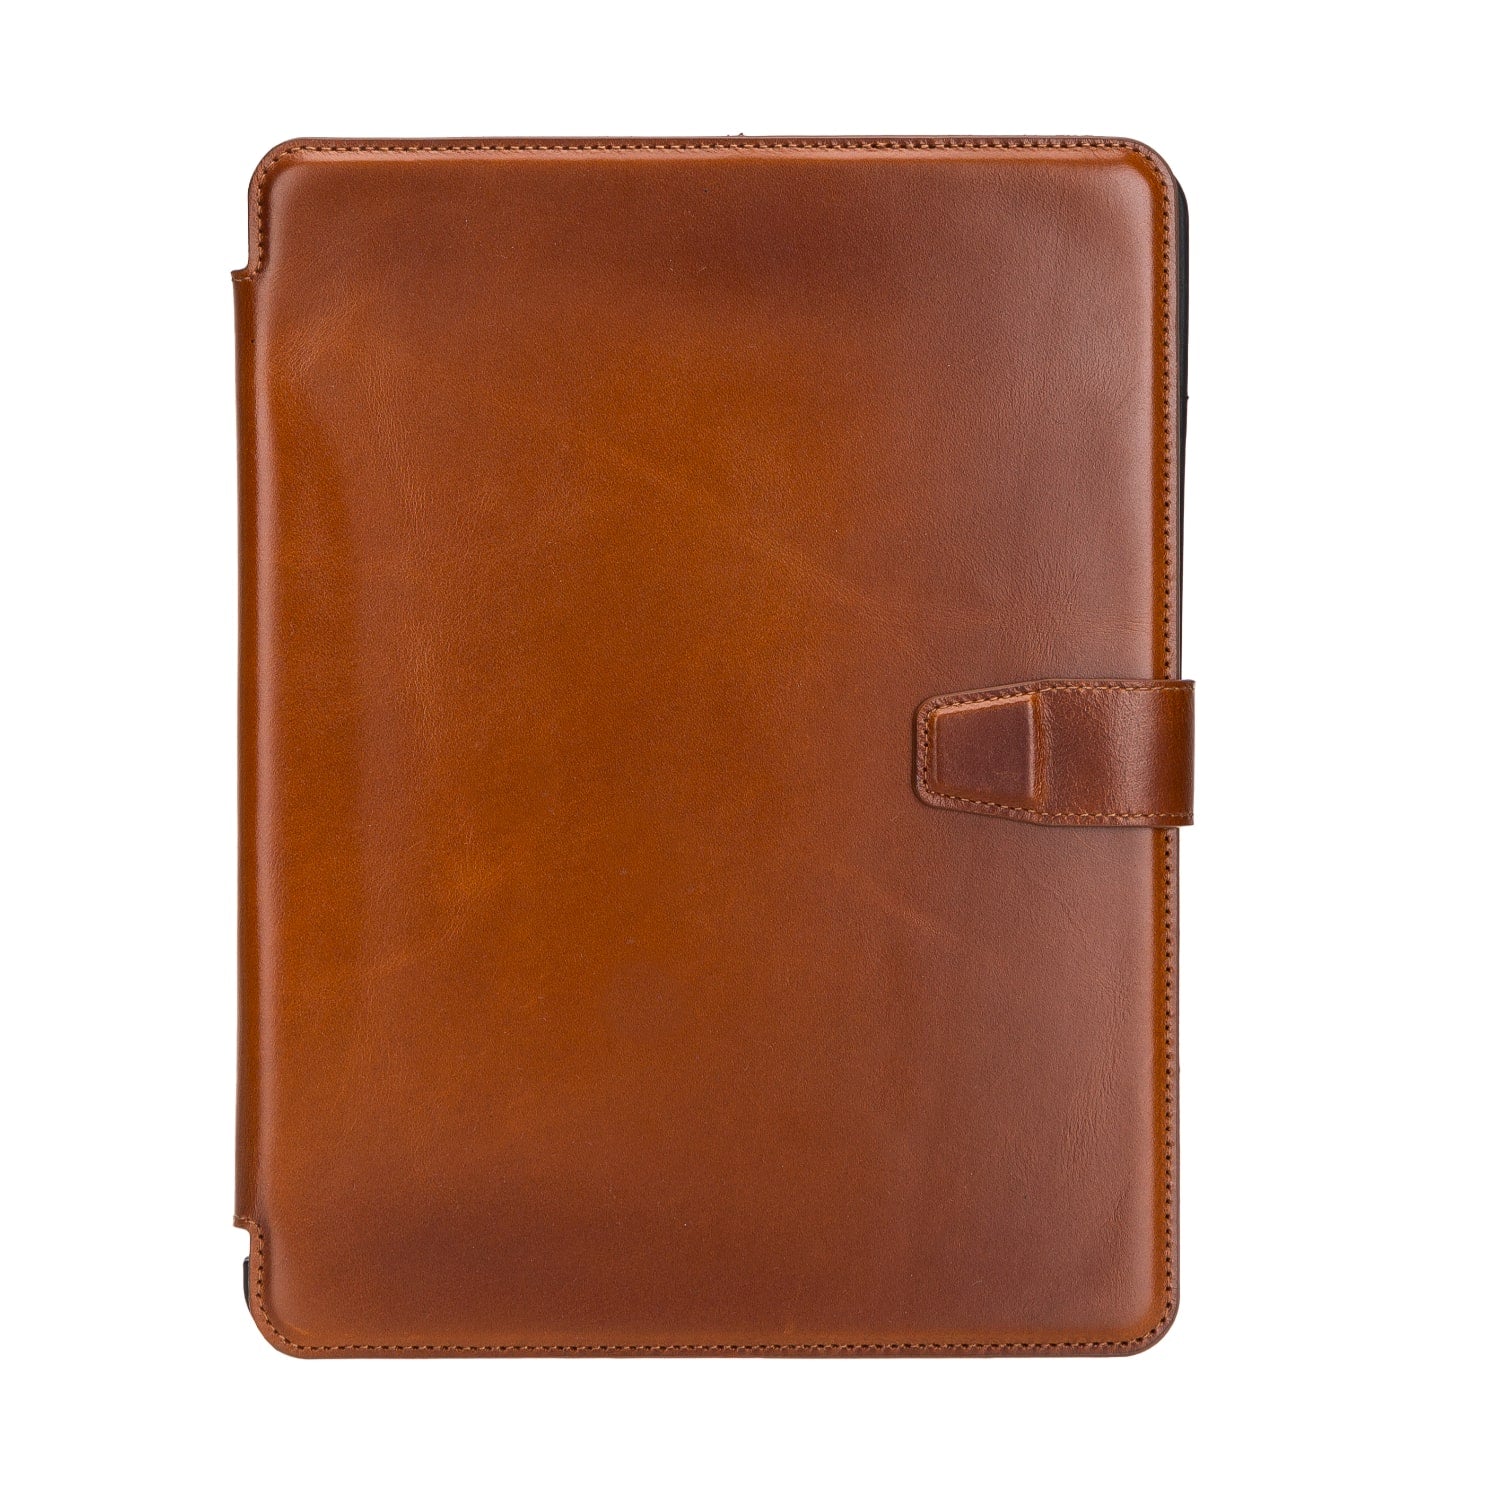 Brown Leather iPad Pro 11 Inc Smart Folio Case with Apple Pen Holder - Bomonti - 3